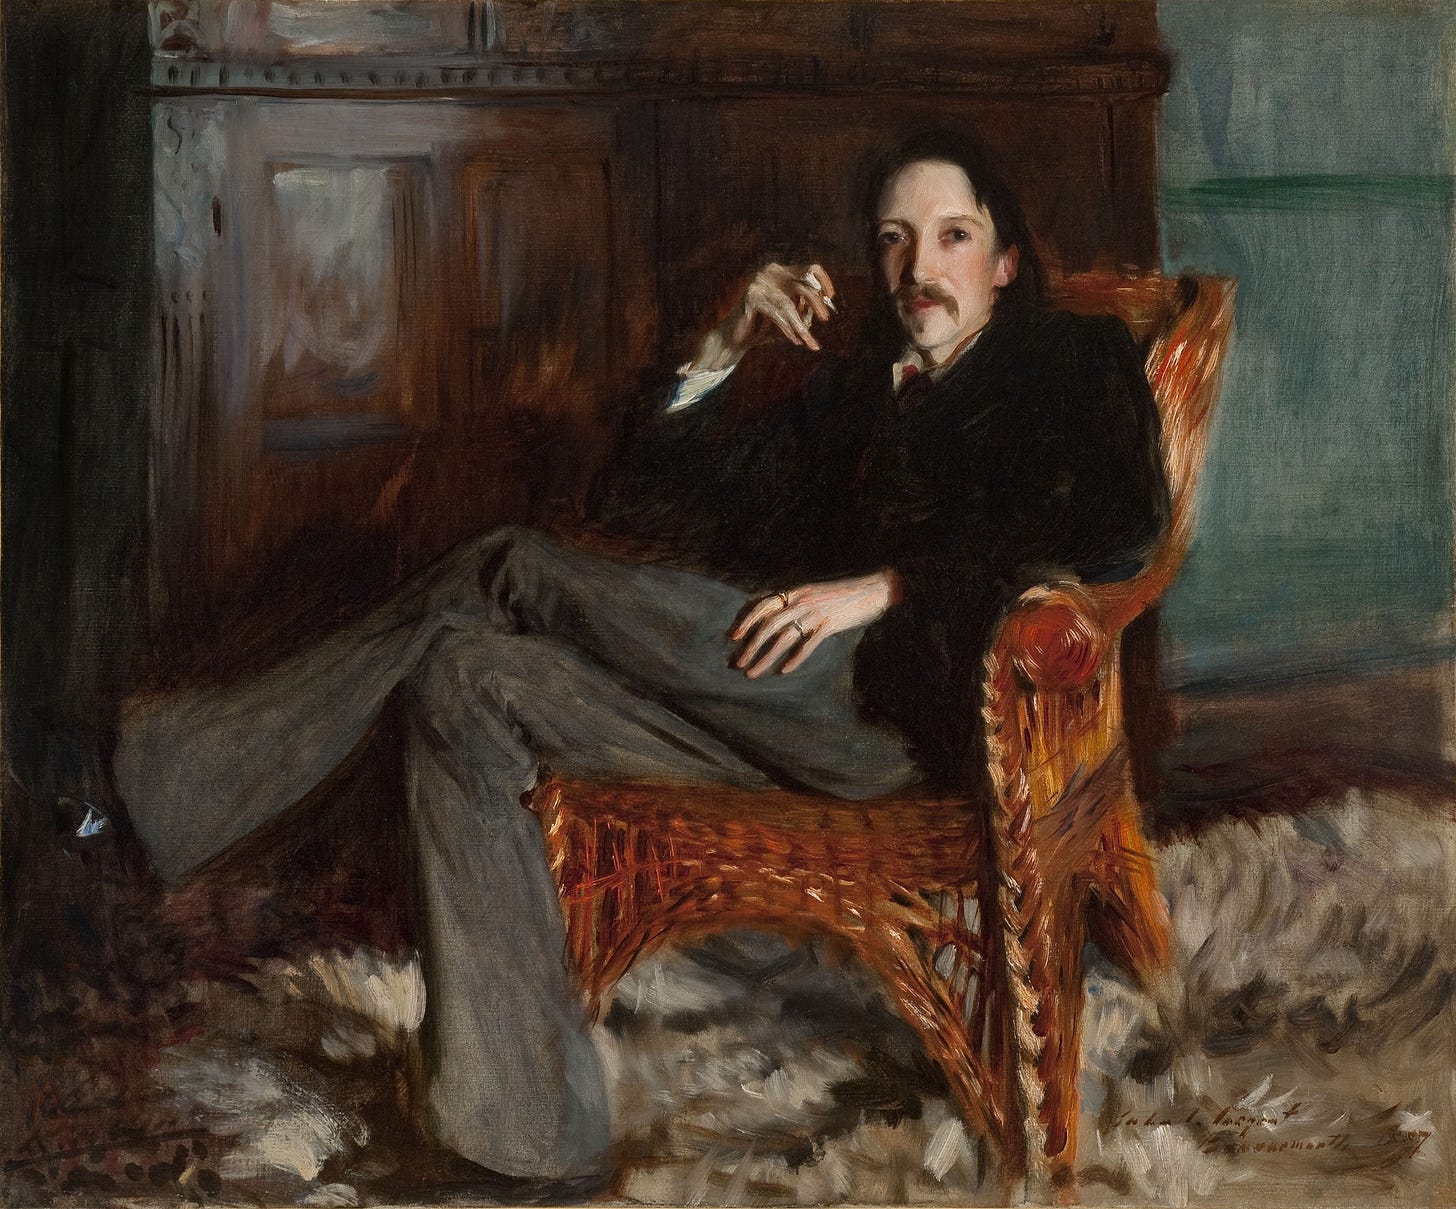 Robert Louis Stevenson (1887)